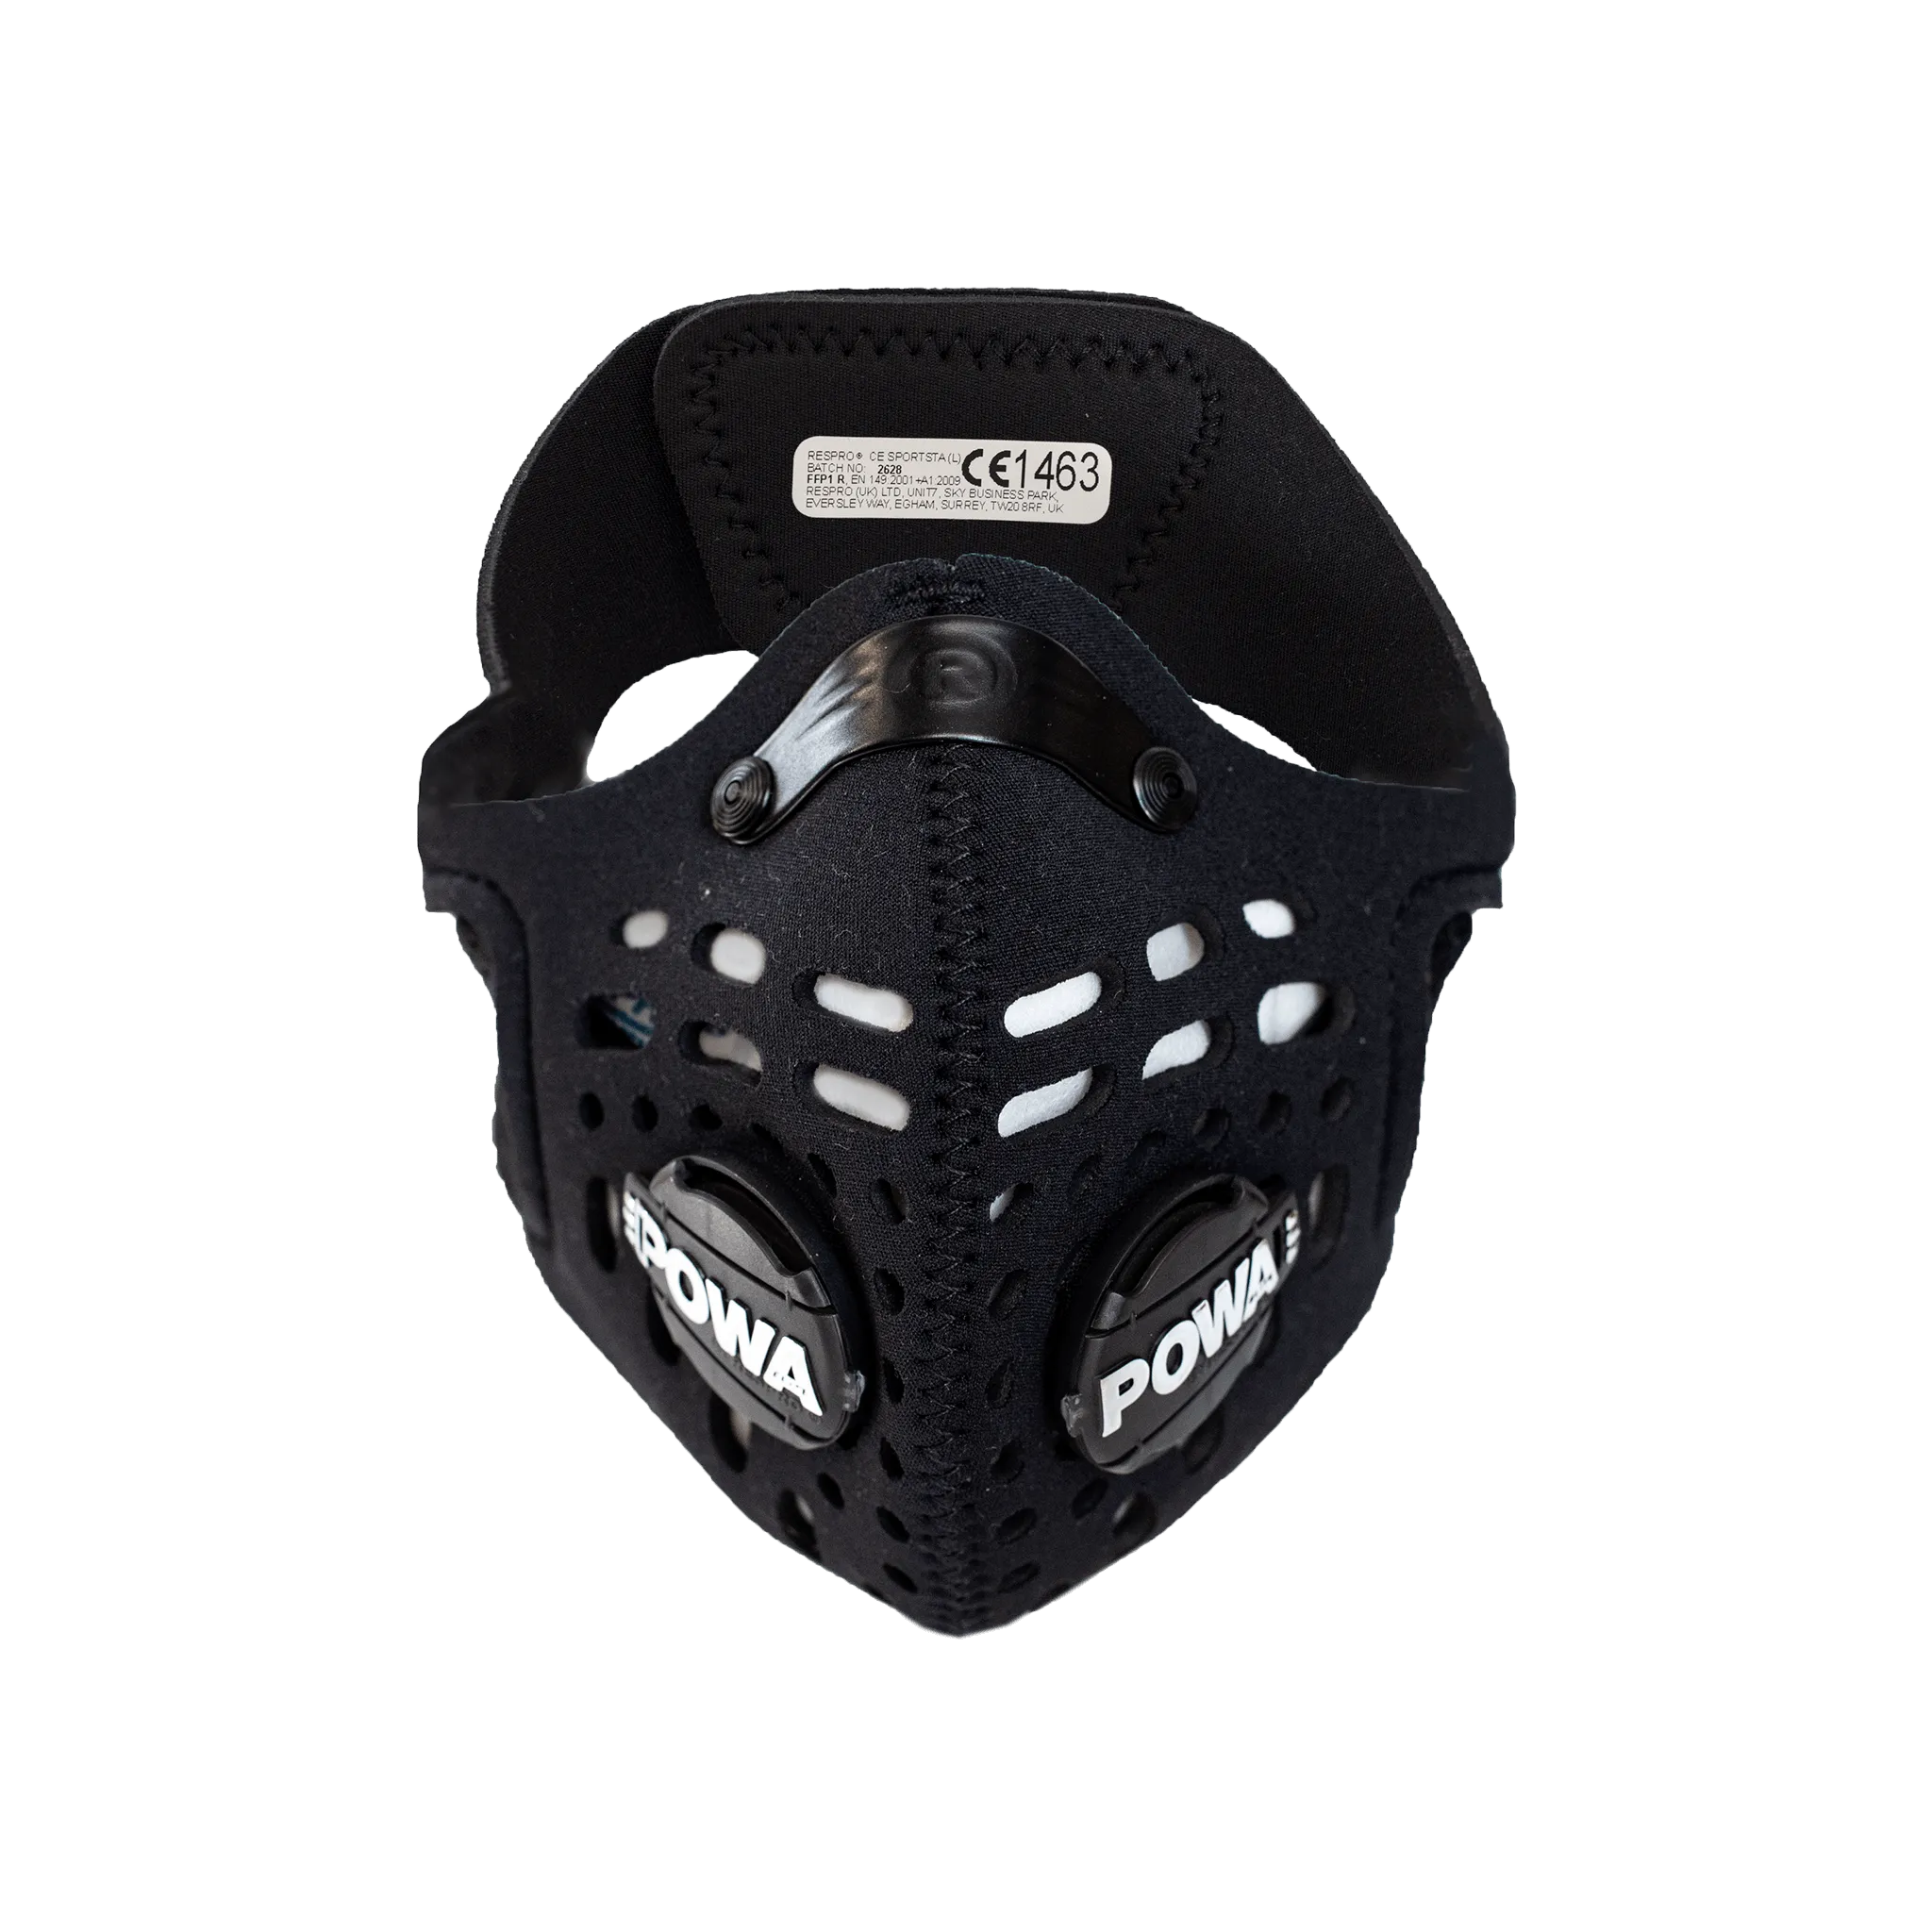 Respro CE Sportsta Black, maska antysmogowa, rozmiar L, 1 sztuka 